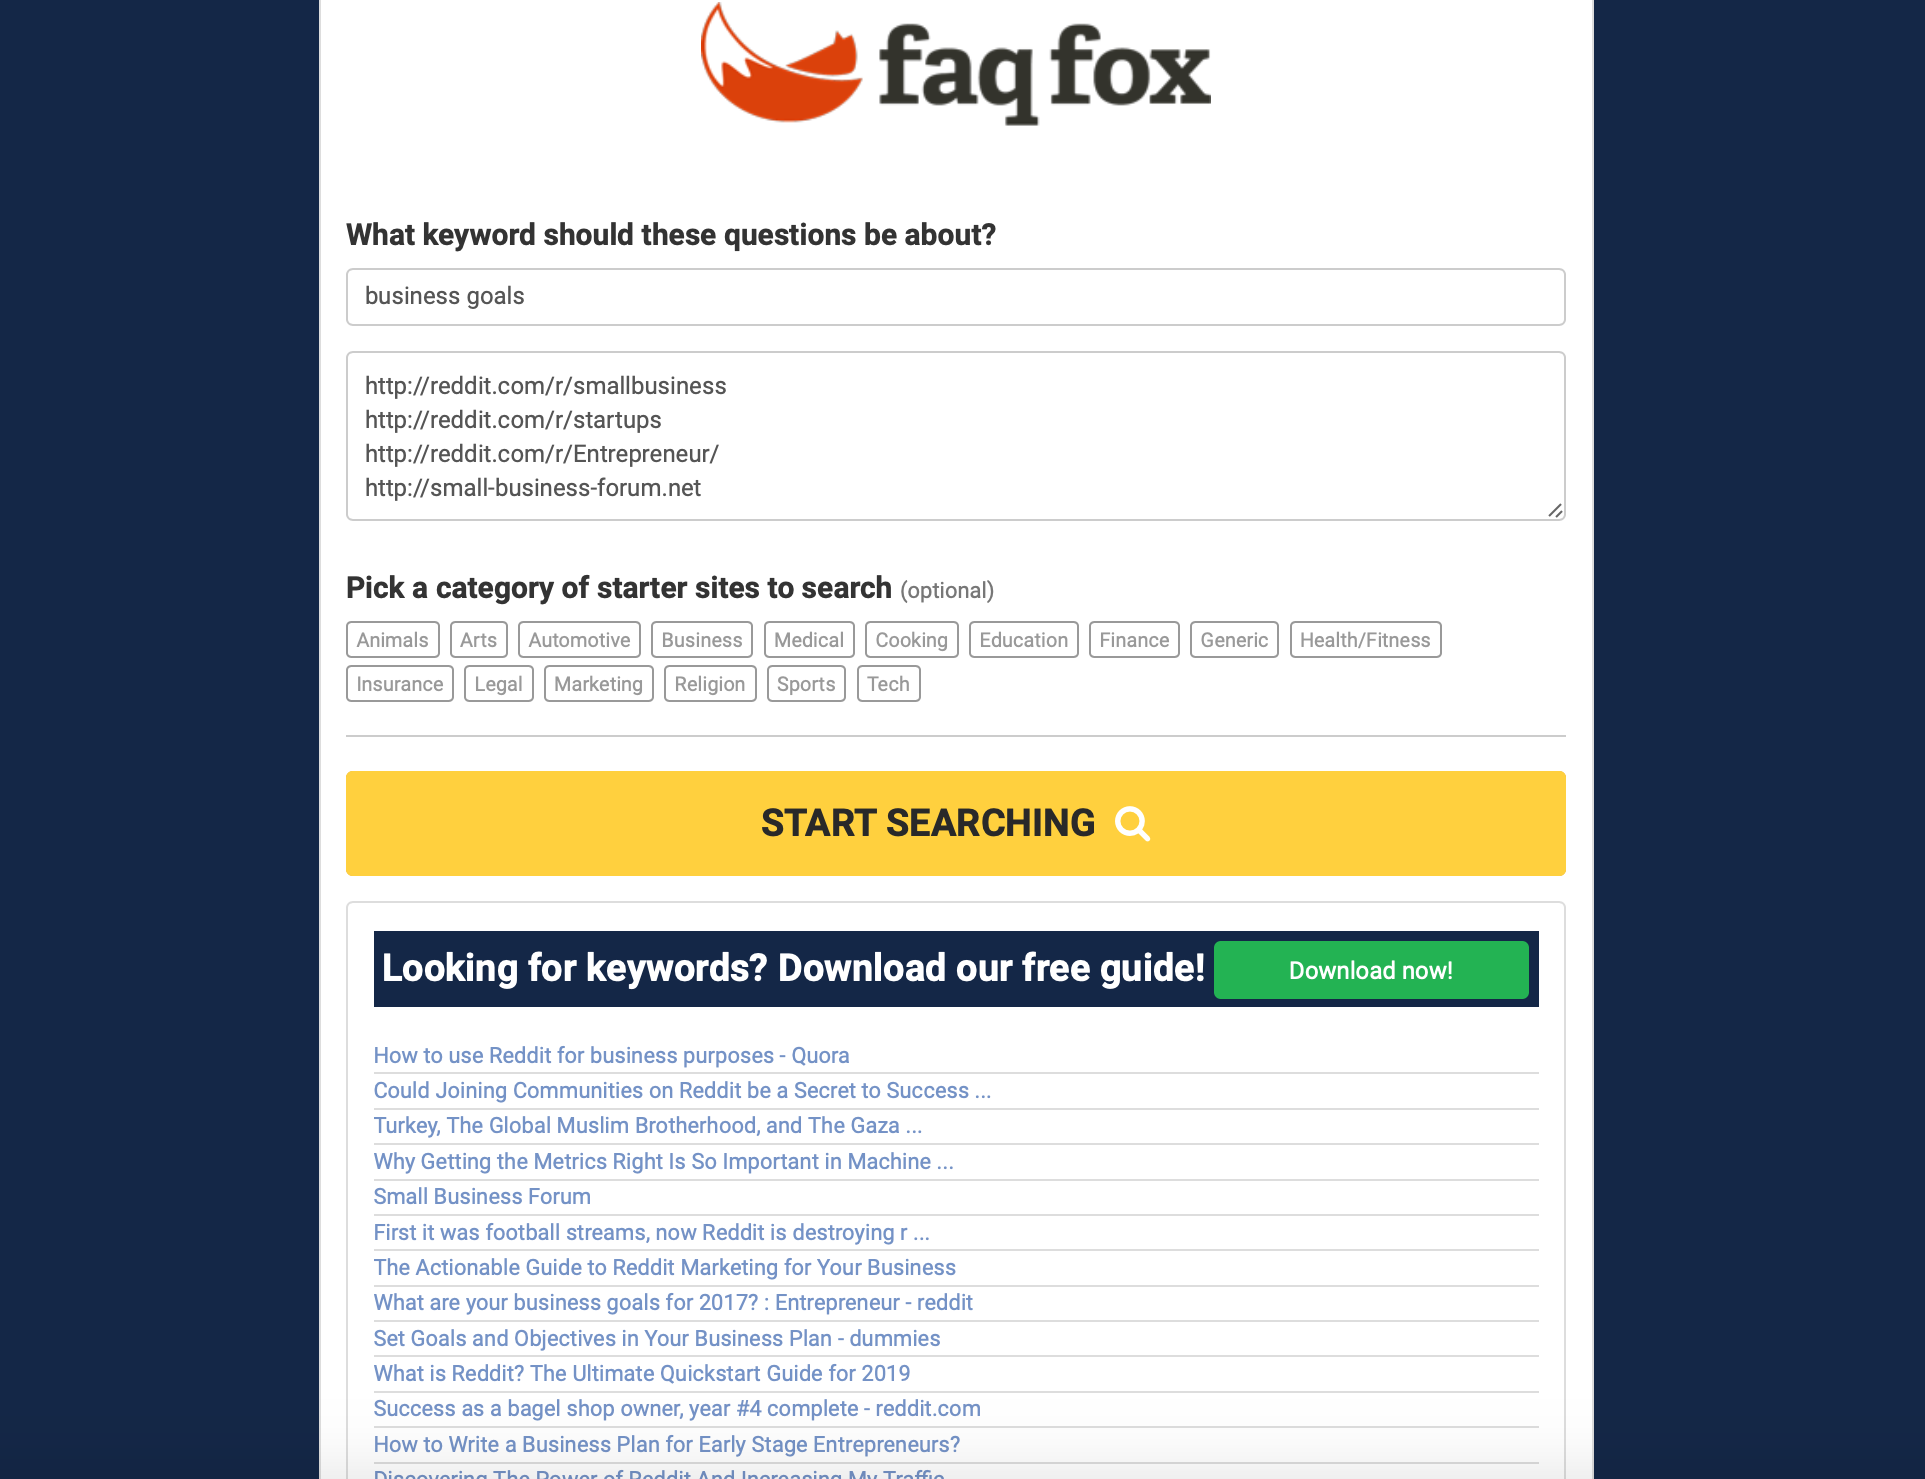 faq fox content ideas